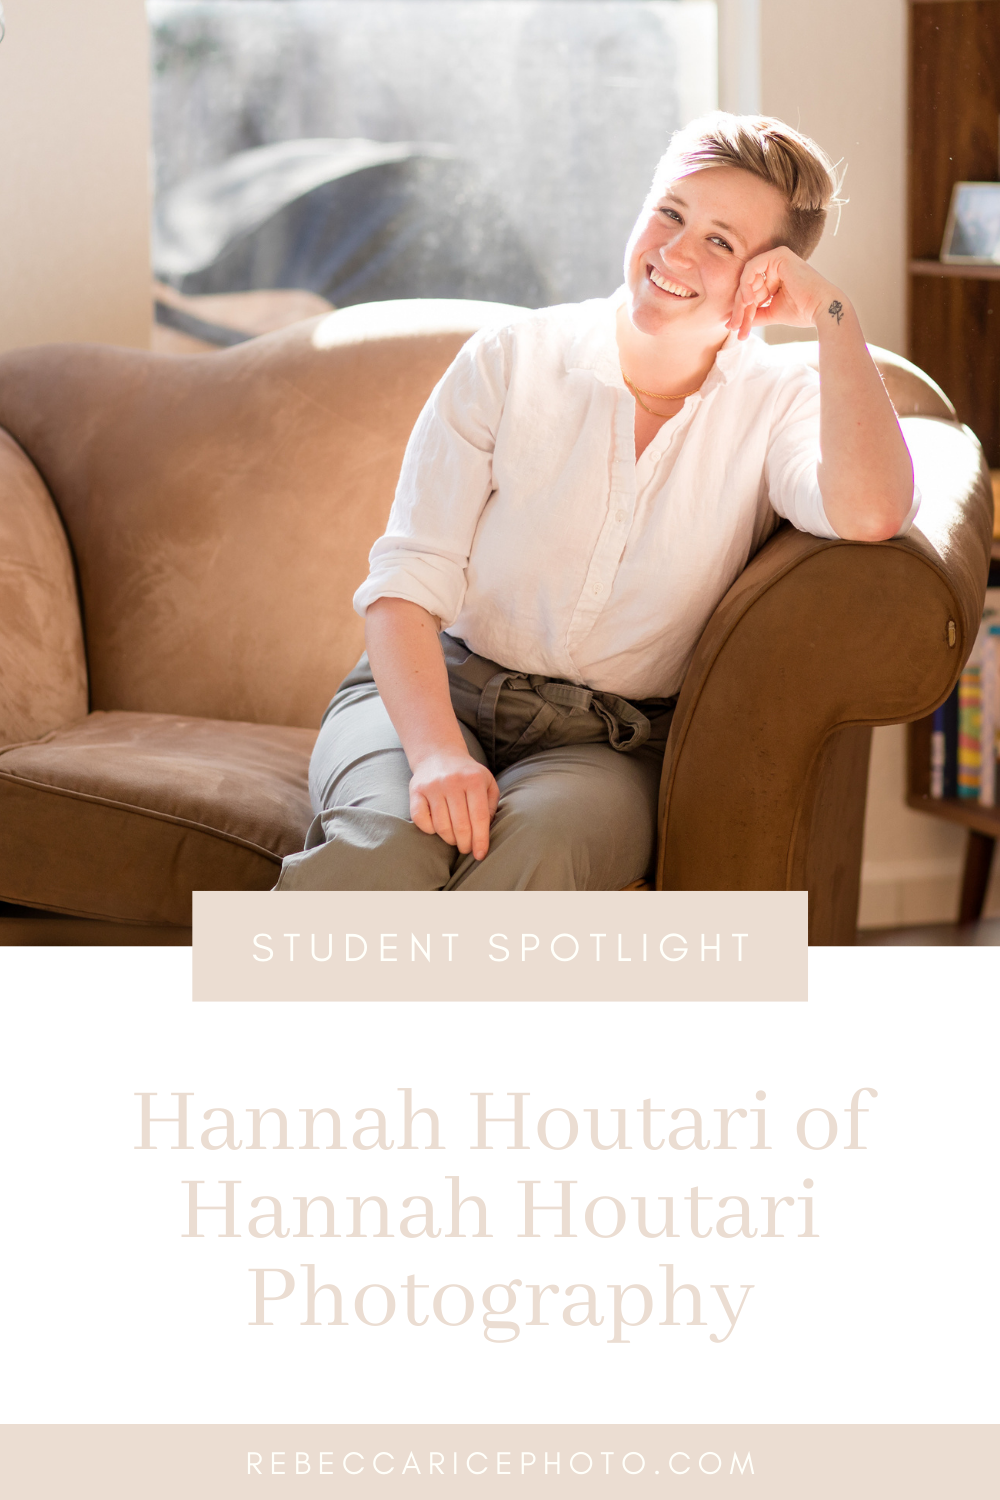 Student Spotlight: Hannah Houtari of Hannah Houtari Photography